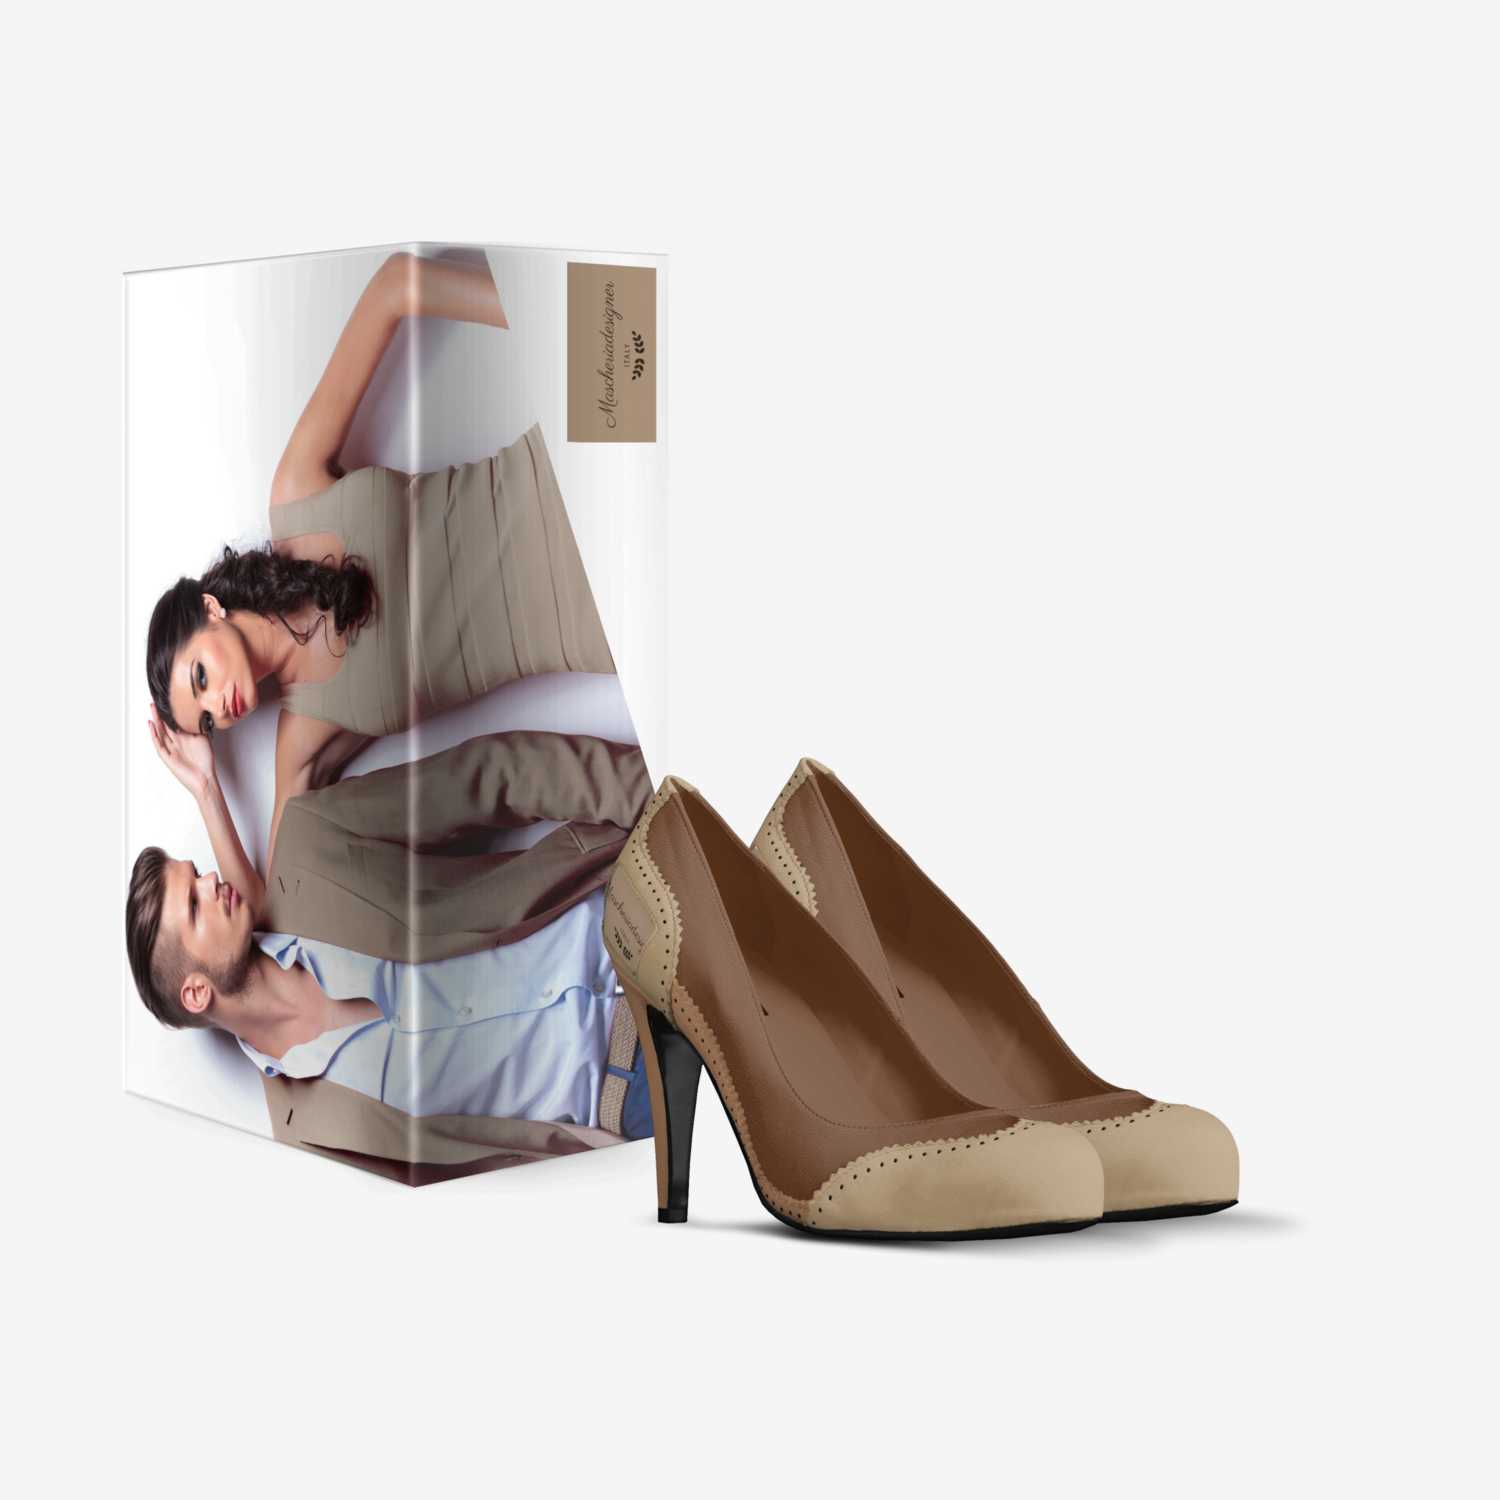 Mascheriadesigner custom made in Italy shoes by Mascheria G Perdue | Box view